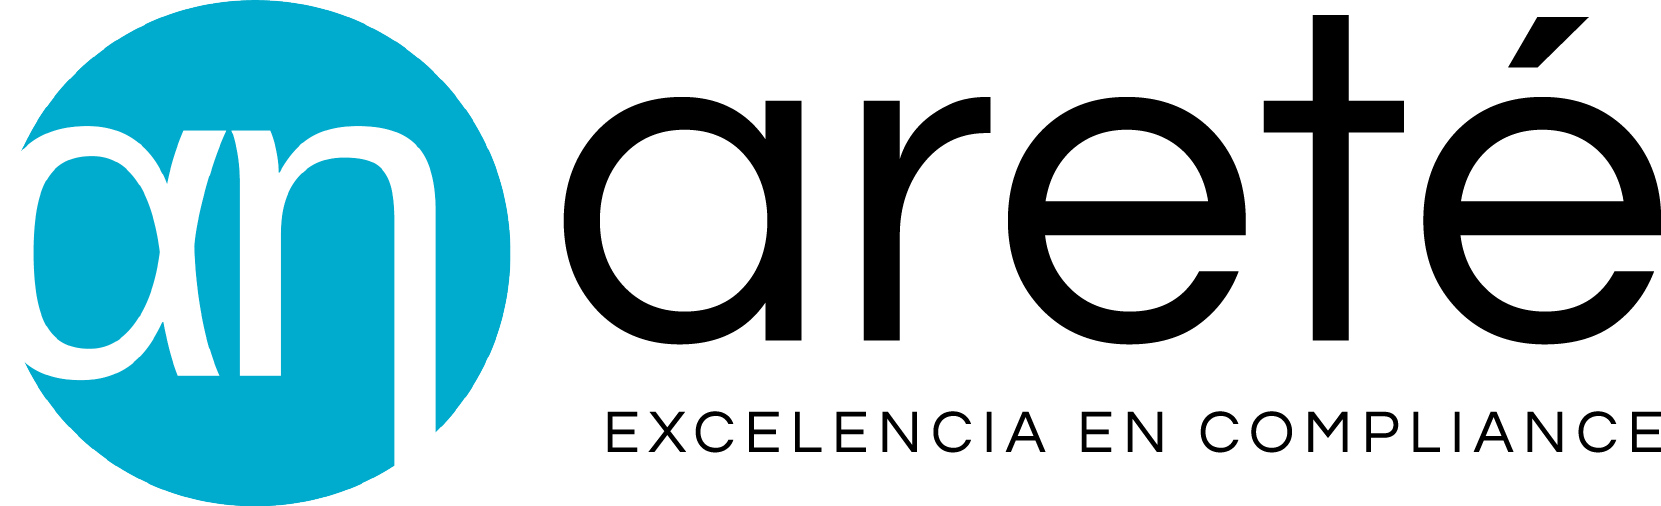 arete logo